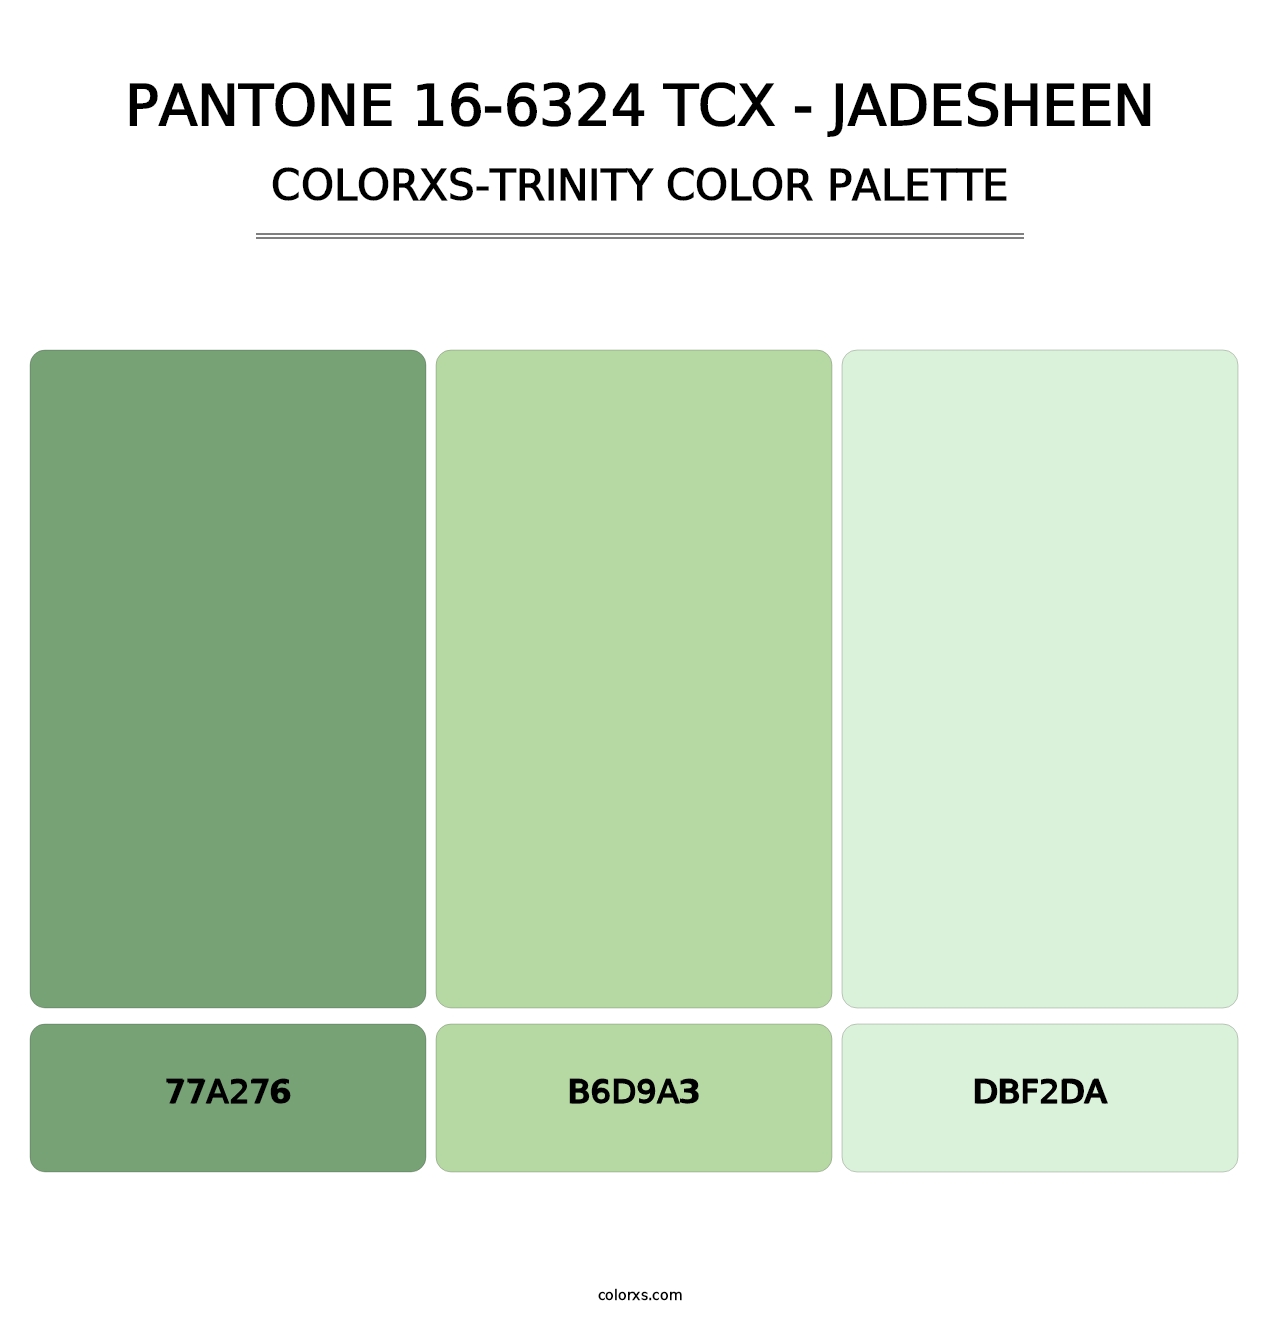 PANTONE 16-6324 TCX - Jadesheen - Colorxs Trinity Palette